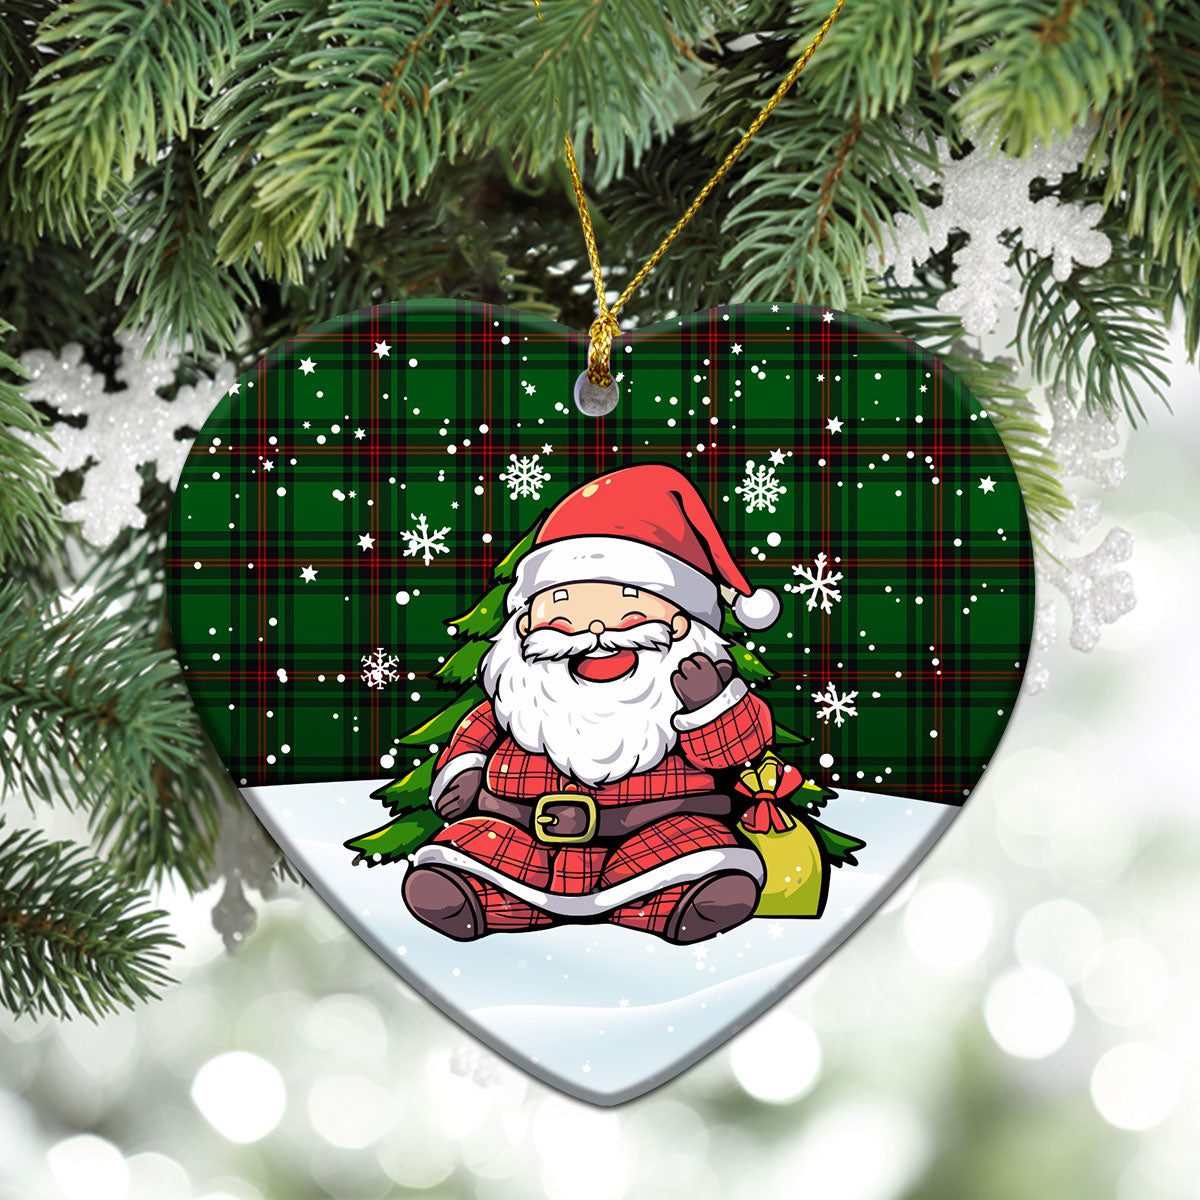 Orrock Tartan Christmas Ceramic Ornament - Scottish Santa Style